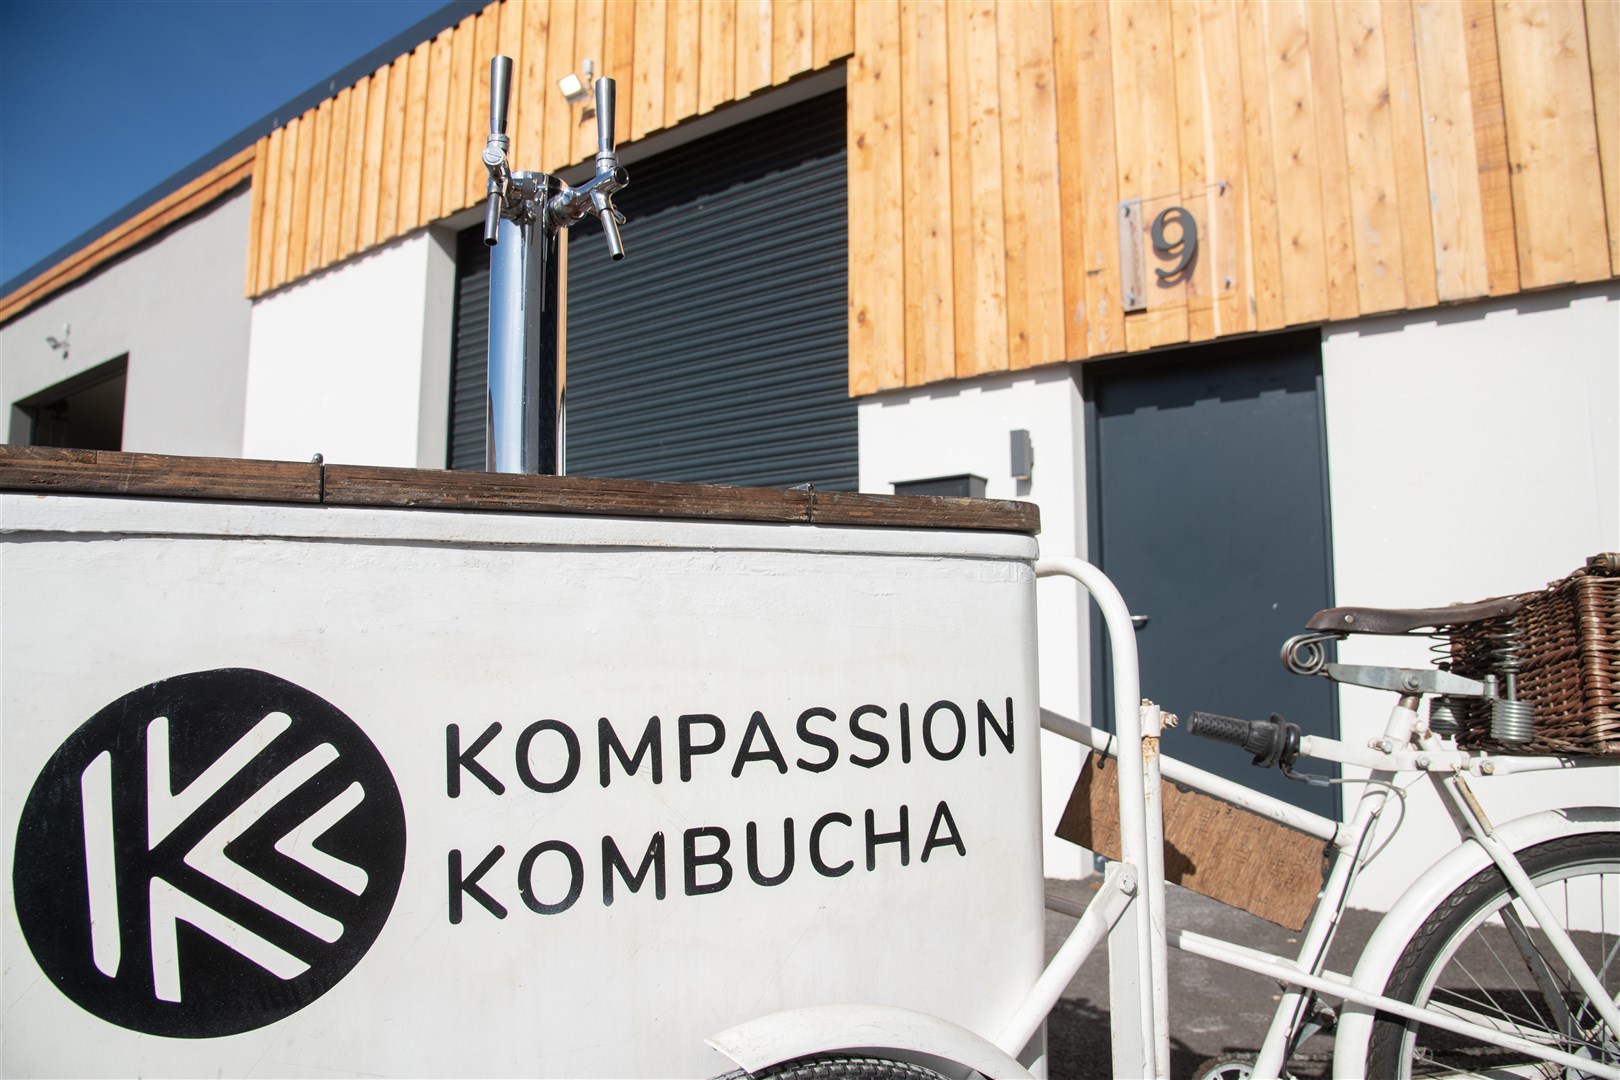 Kompassion Kombucha has a warehouse in Elgin.